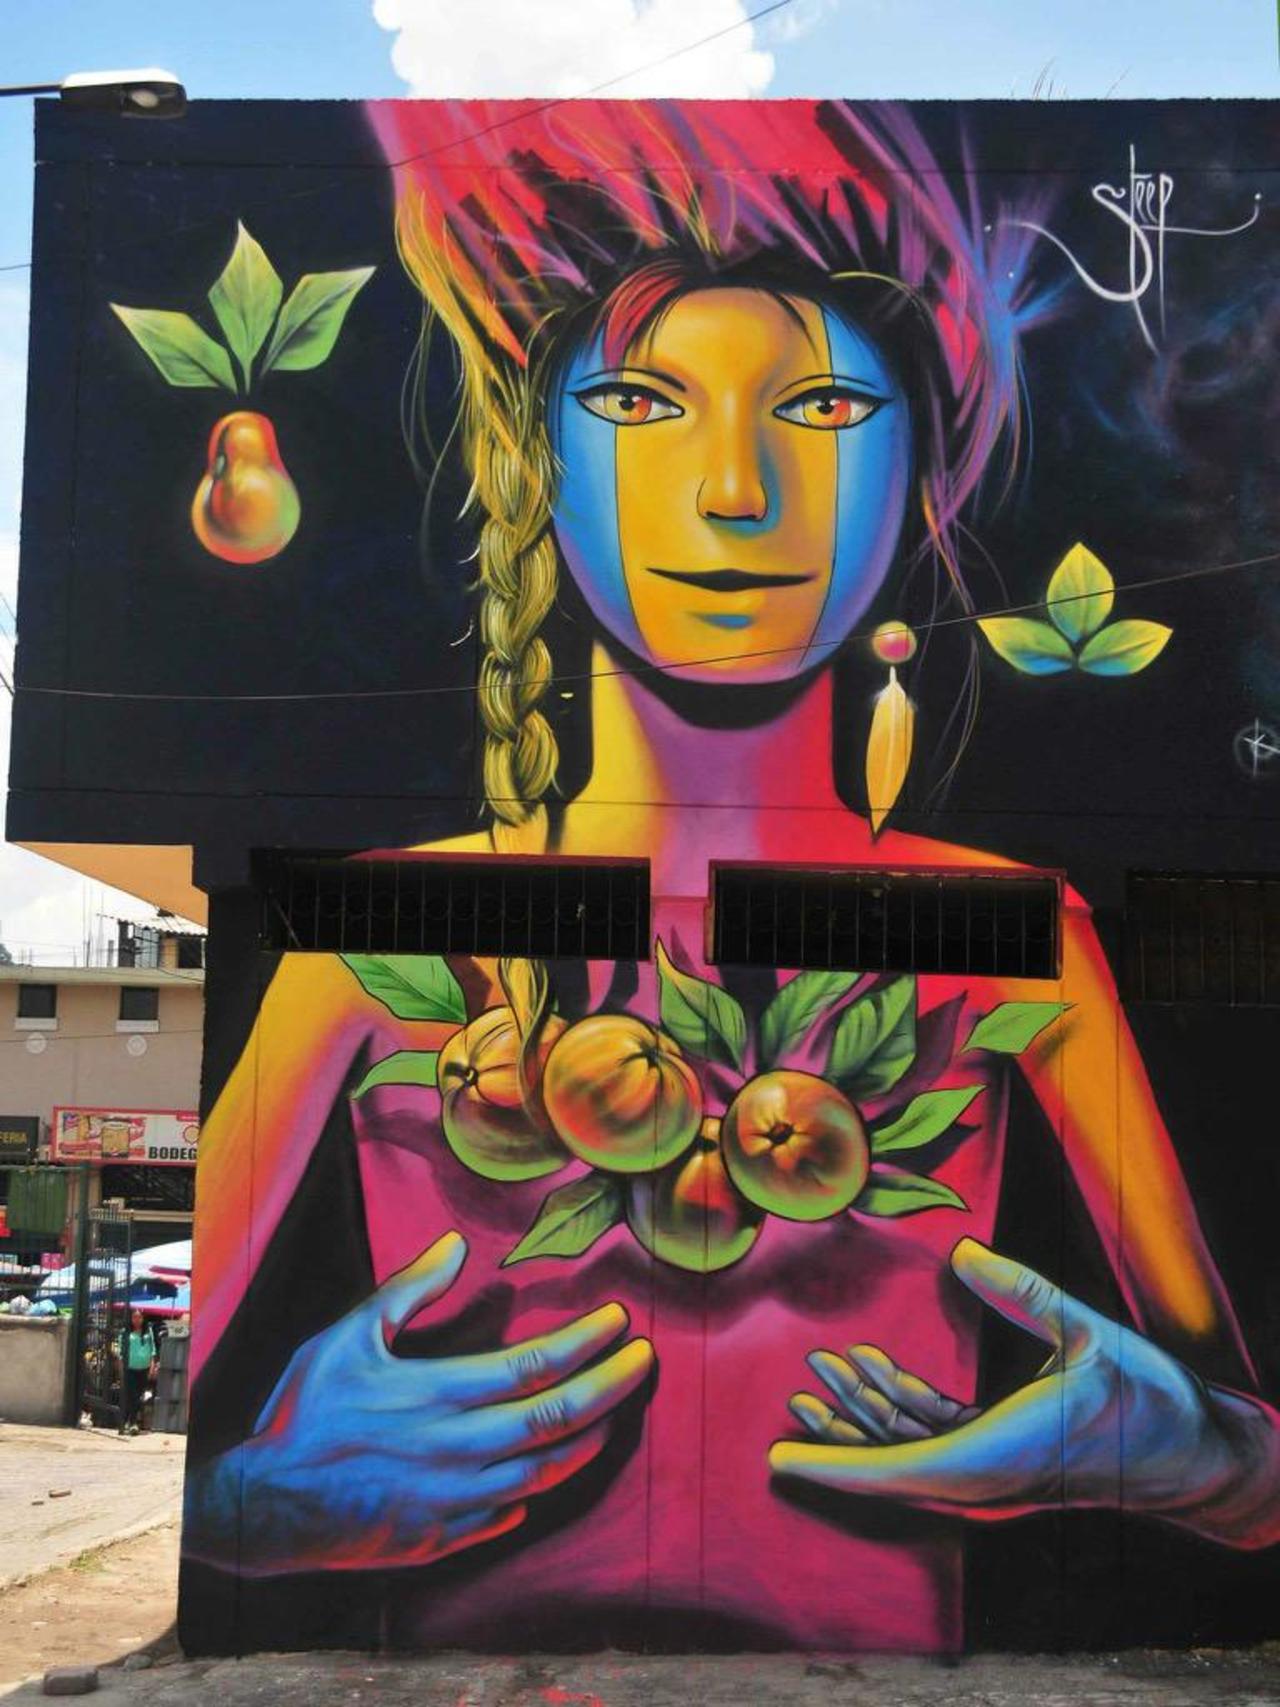 Street Art by Steep

#art #graffiti #mural #streetart http://t.co/mkRjiMjjqP